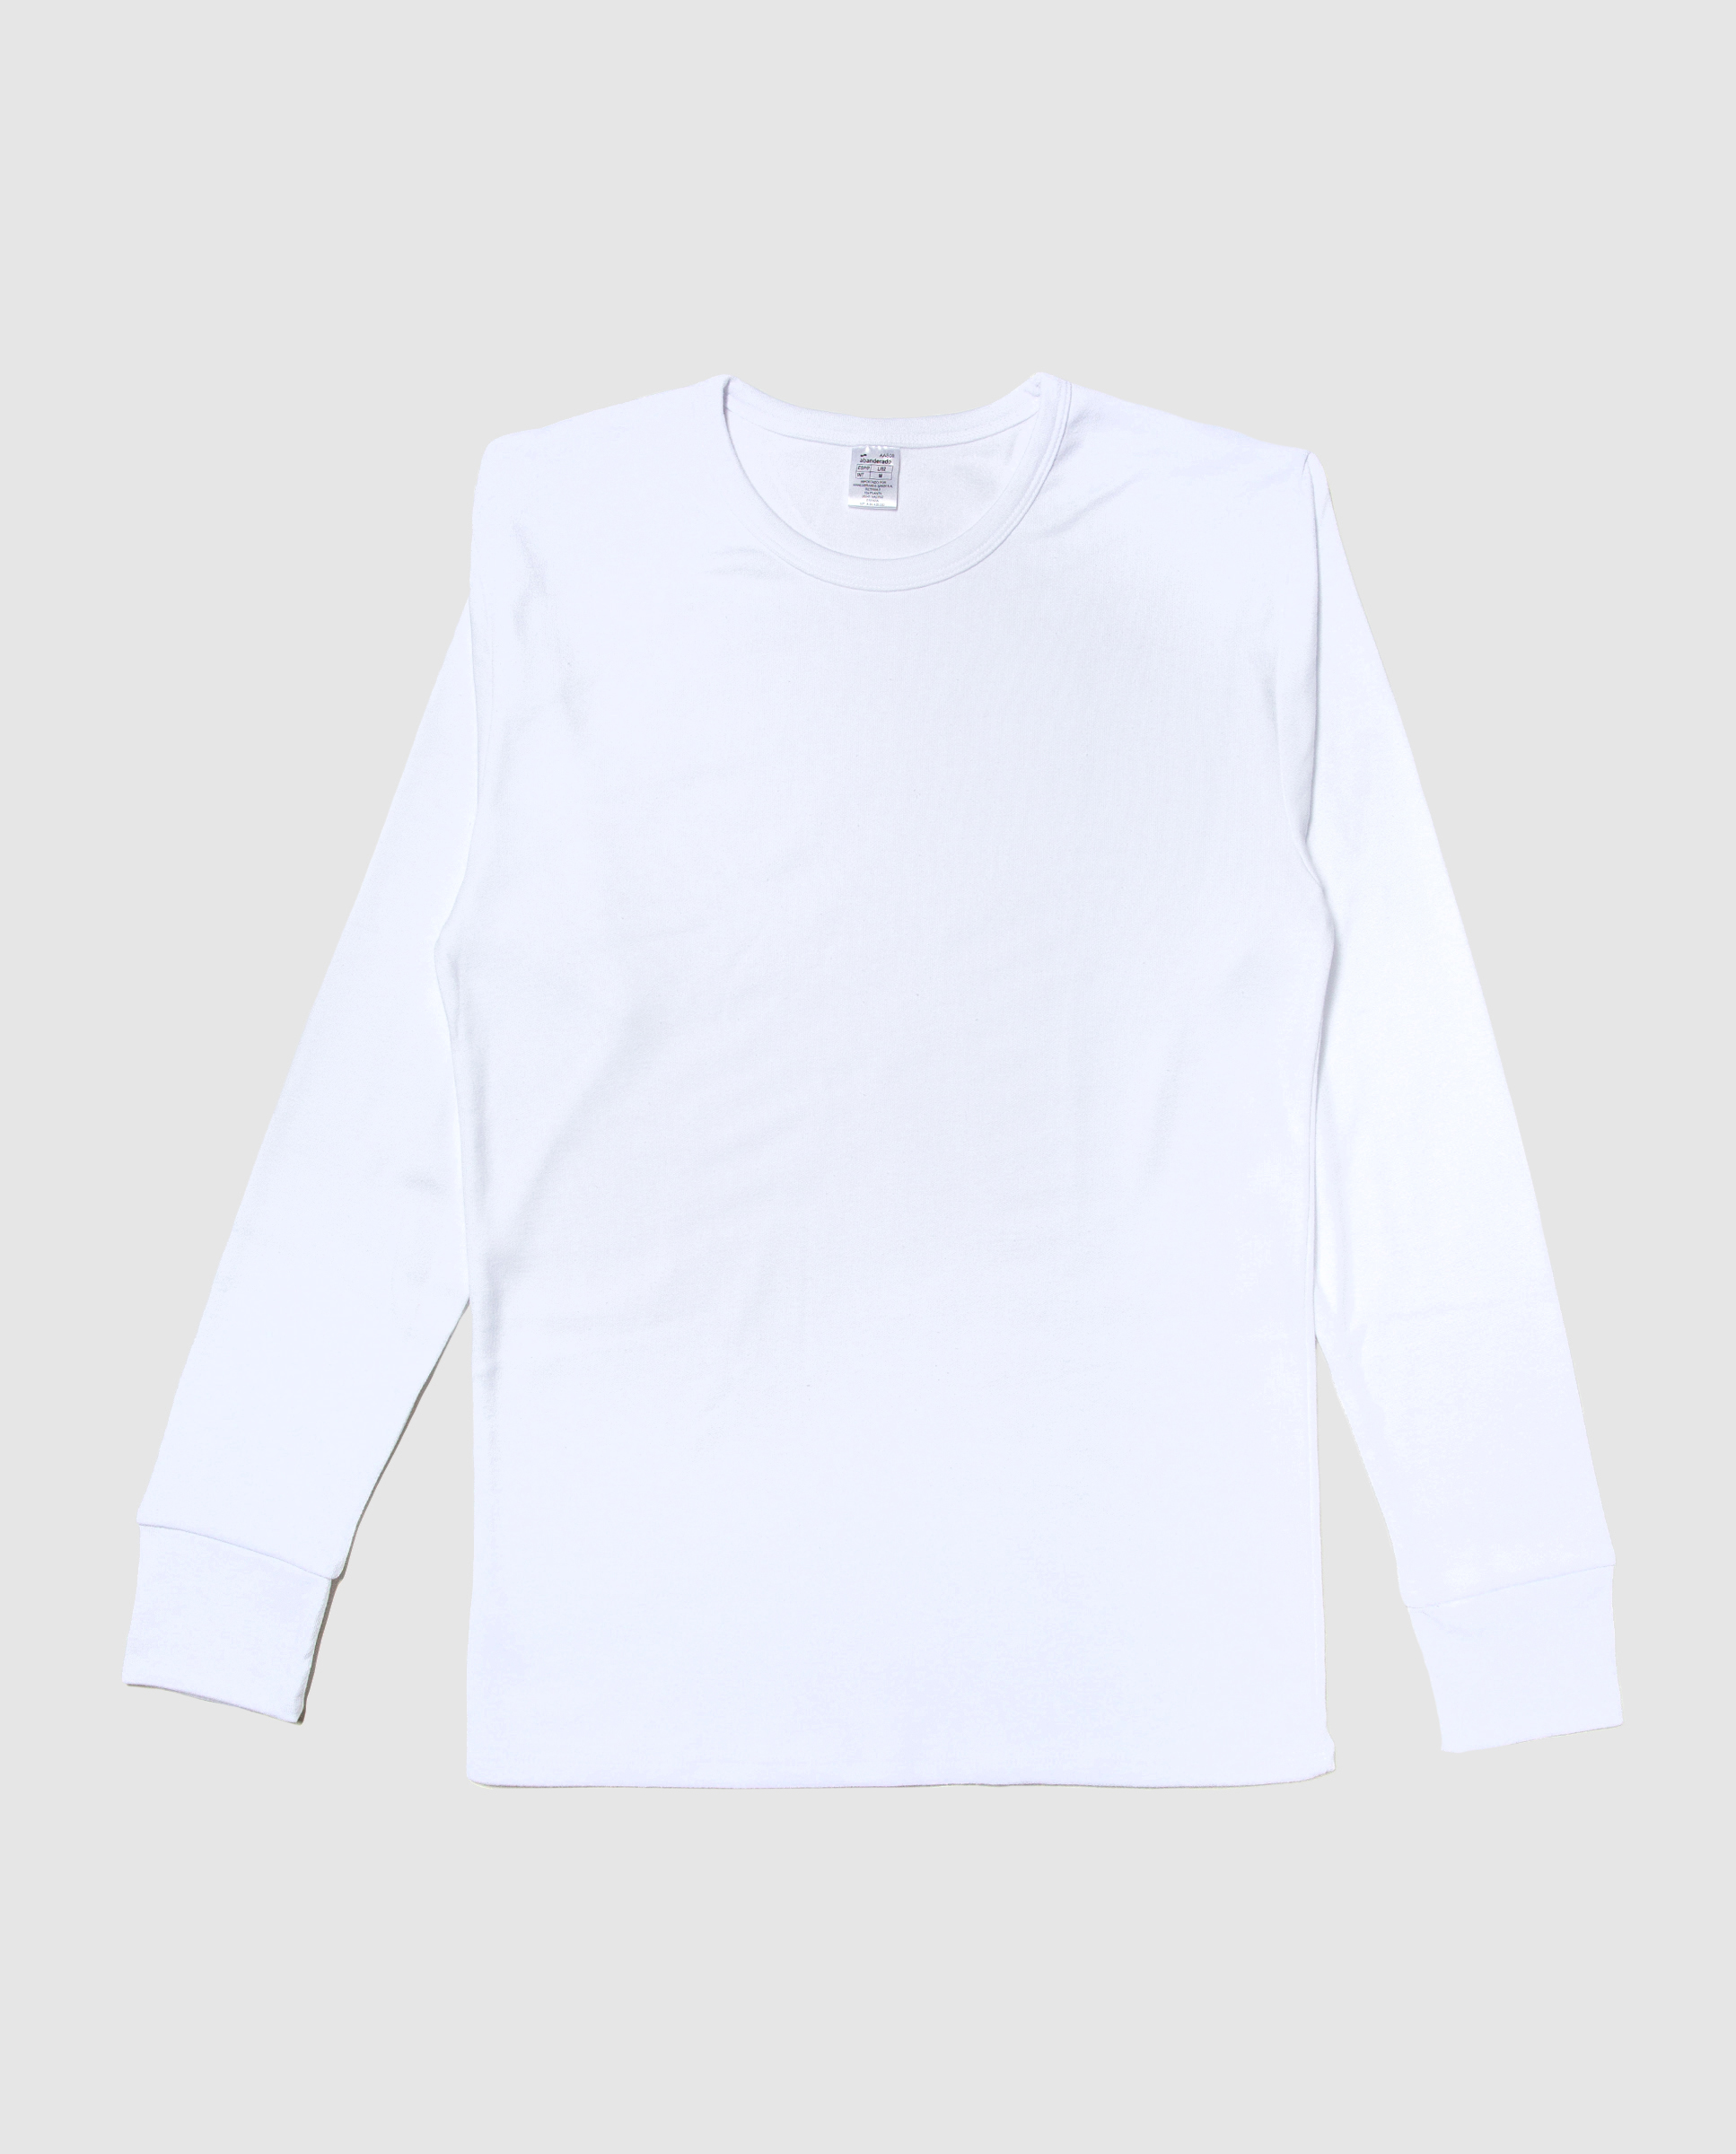 Camiseta 100% algodón manga larga FELPA INTERIOR (enguera)